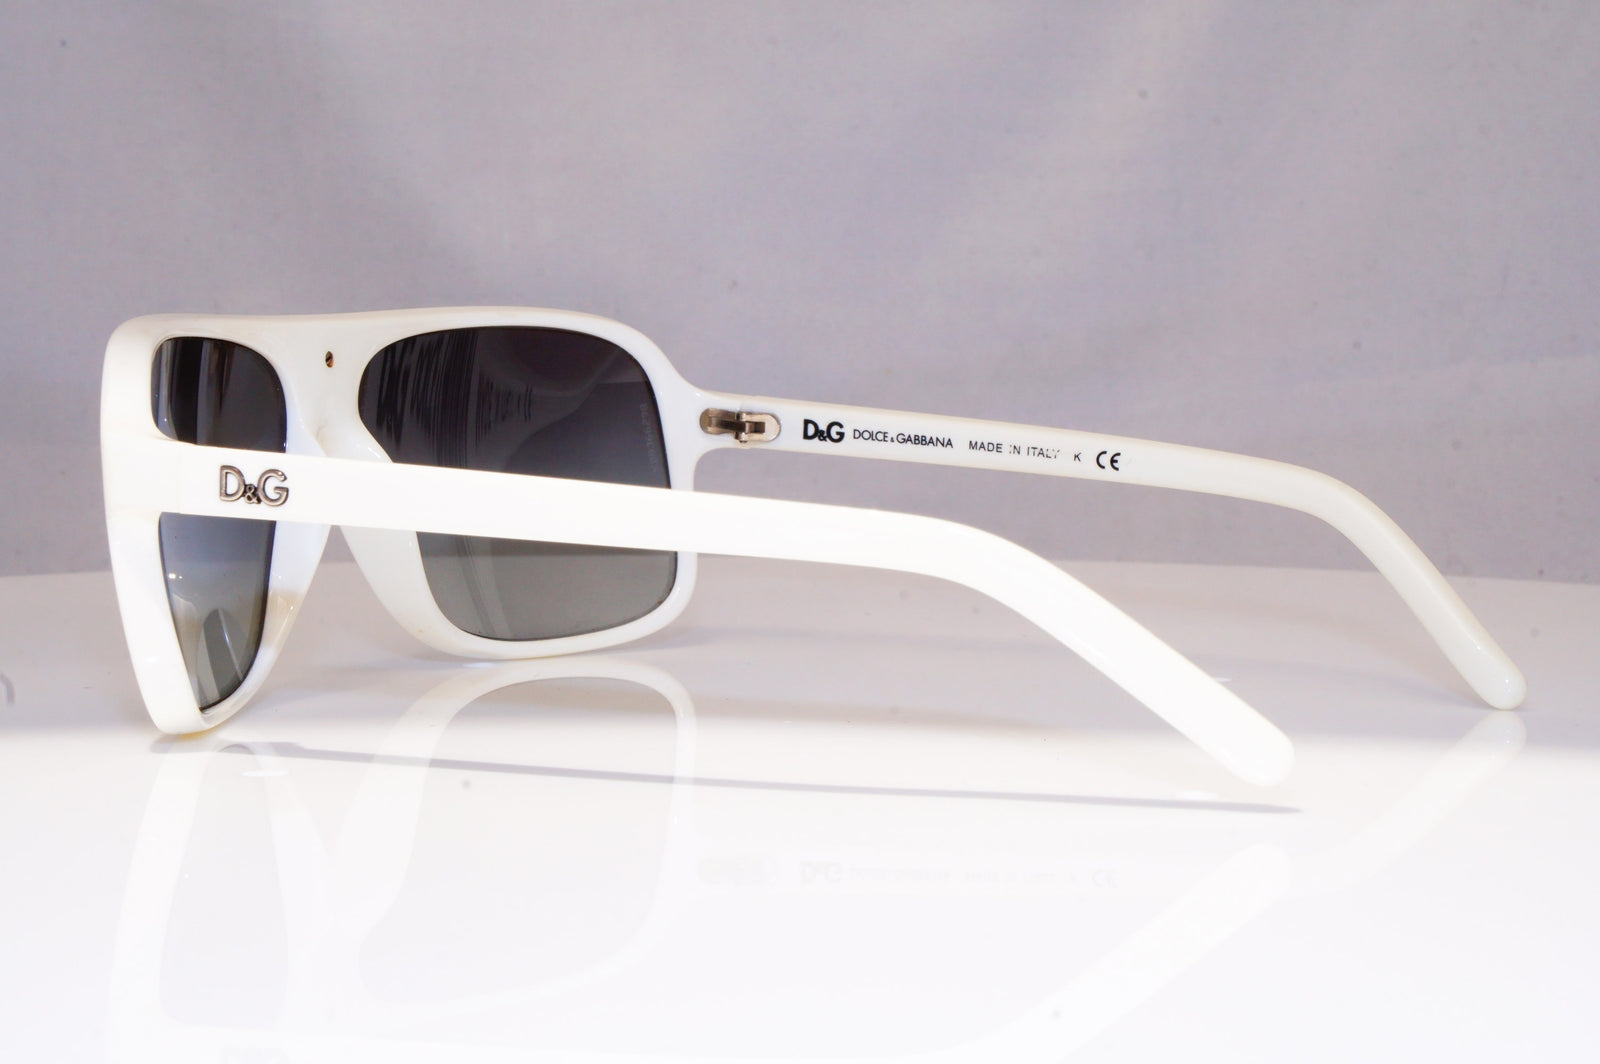 white dolce and gabbana sunglasses